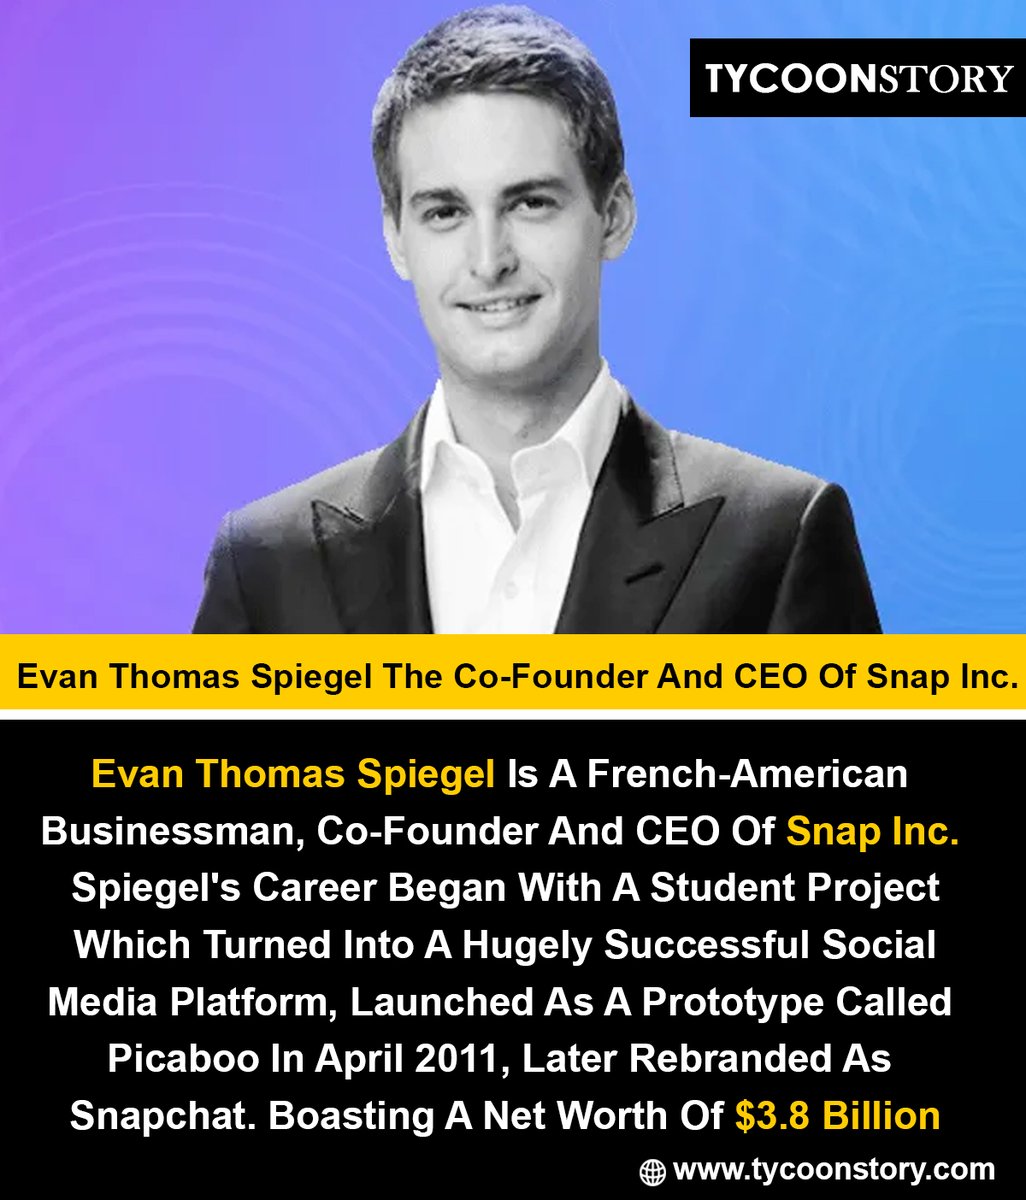 Evan Thomas Spiegel The Co-Founder And CEO Of Snap Inc.

#EvanSpiegel #SnapInc #CEO #TechInnovator #Snapchat #Entrepreneur #DigitalVisionary #StartupFounder #TechLeader #Innovation #SocialMedia #DigitalMarketing @Snap 

tycoonstory.com